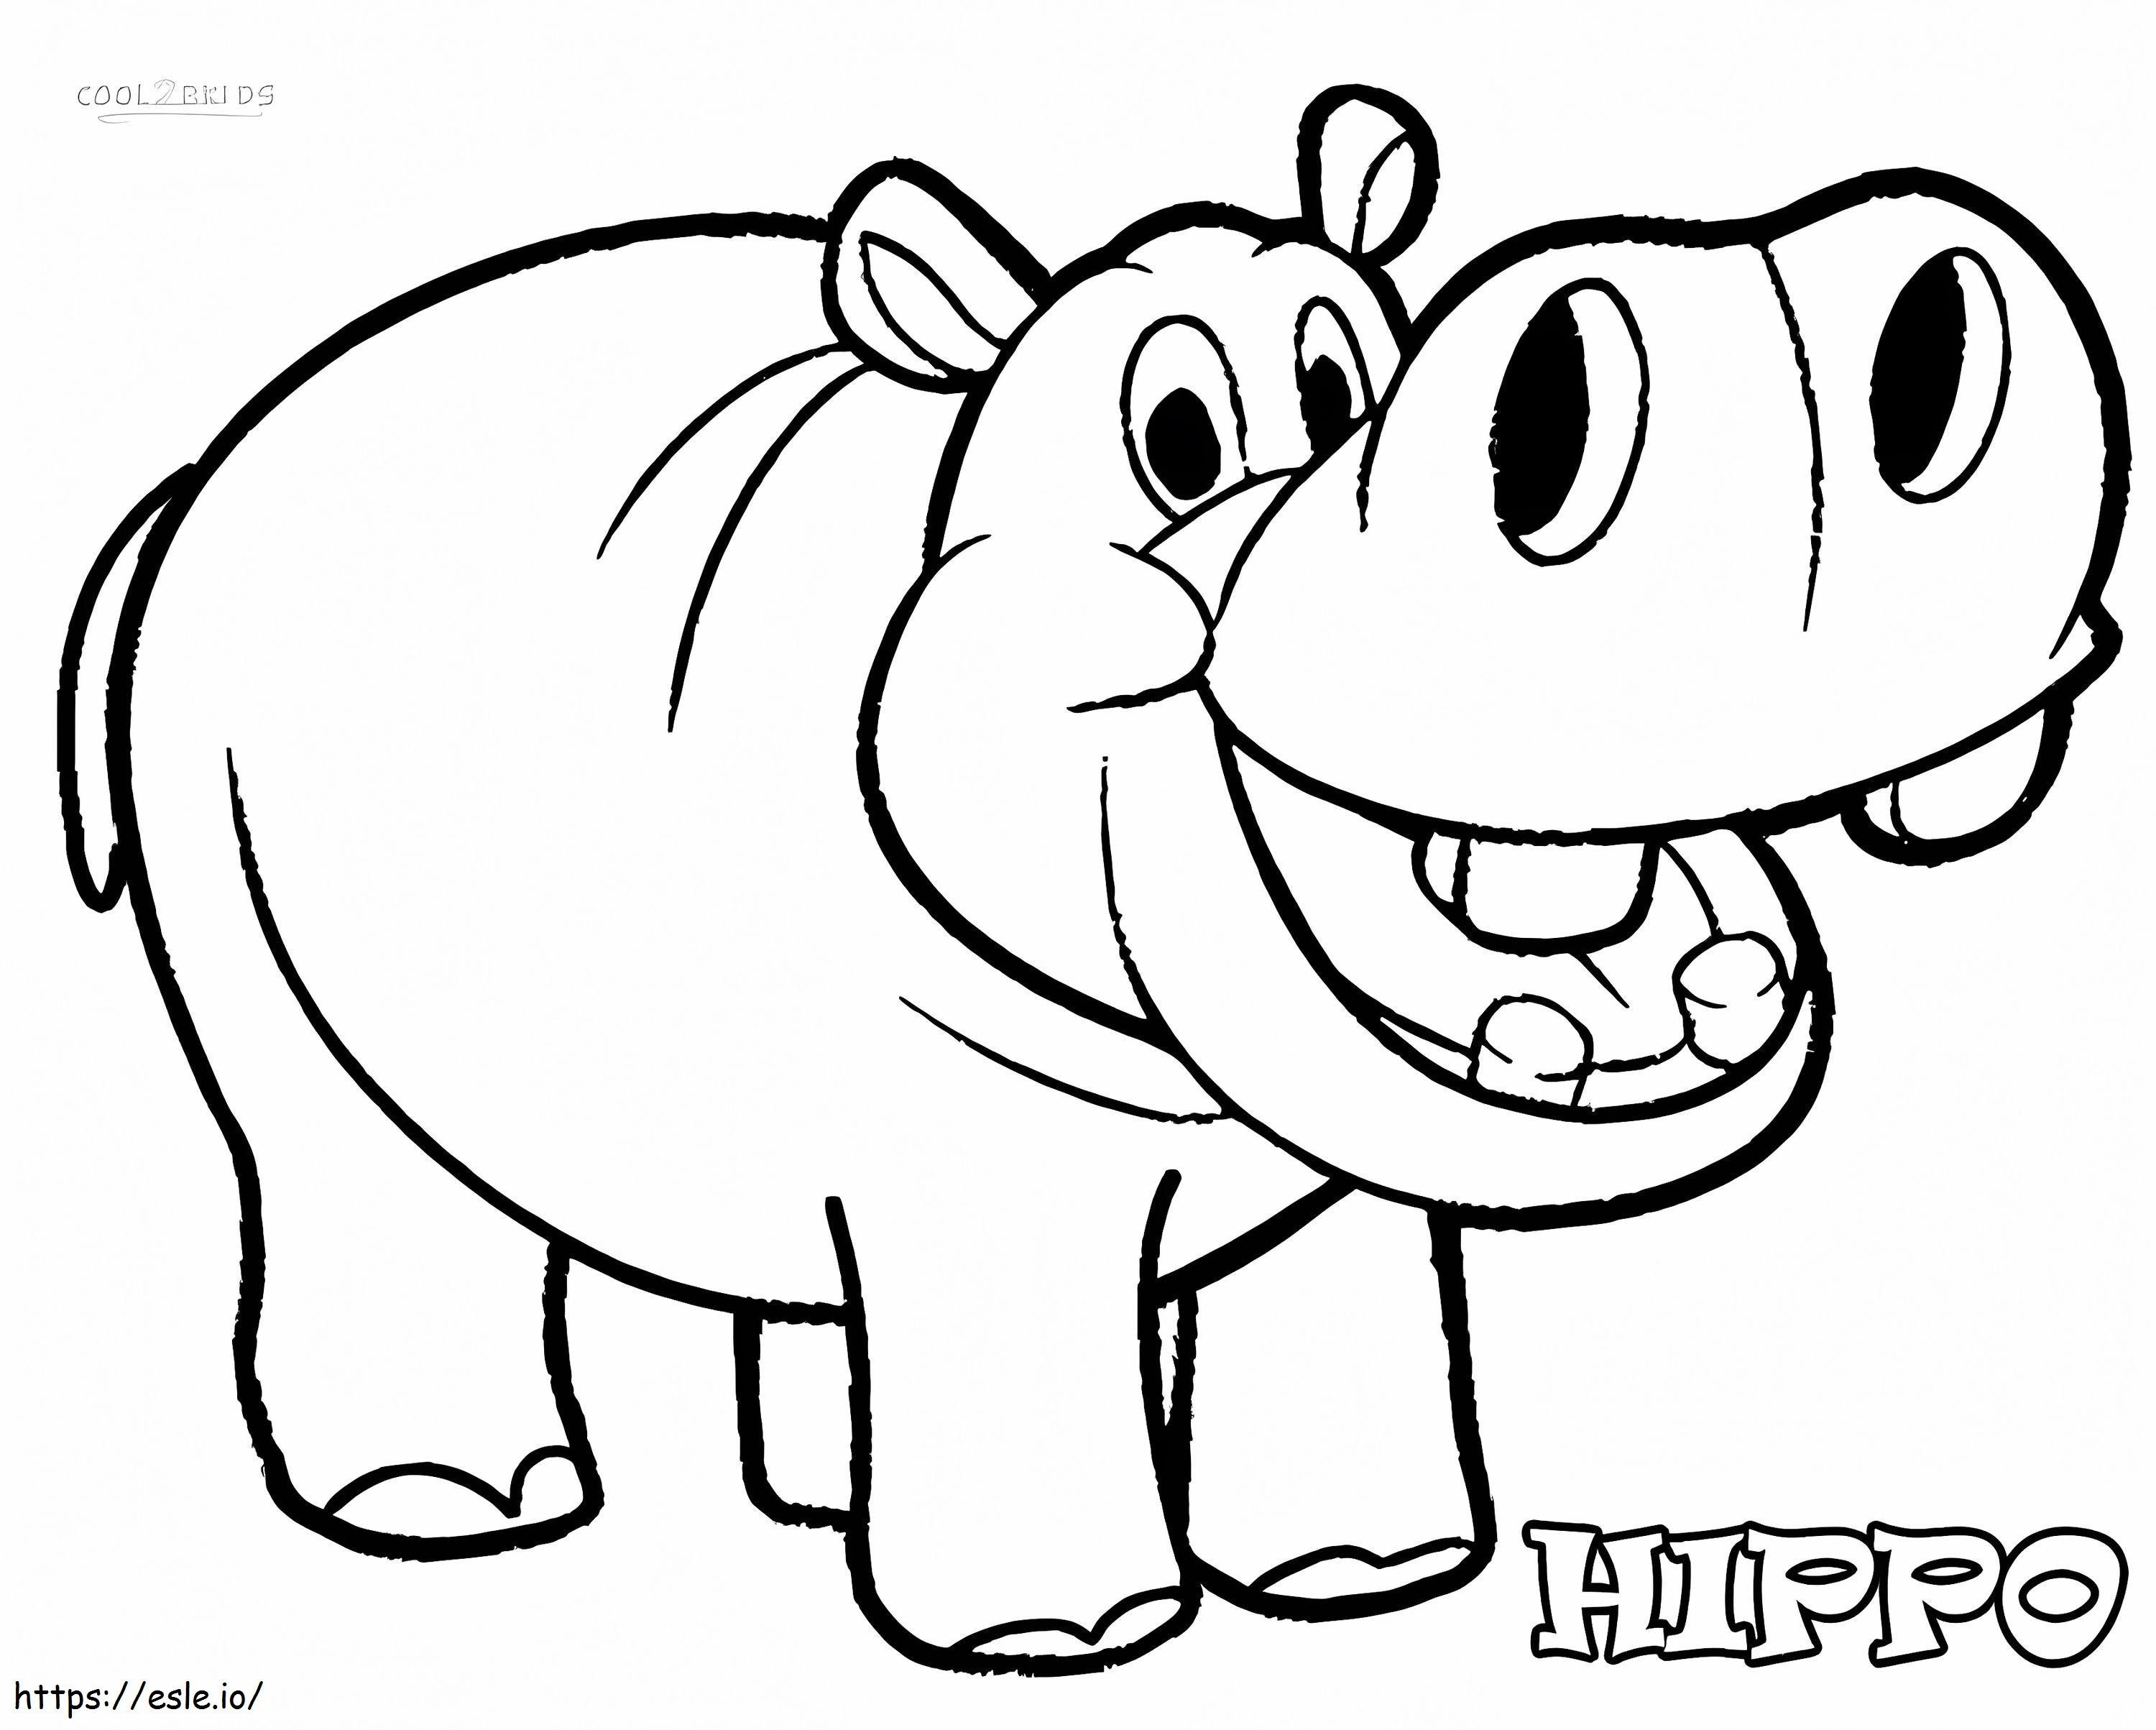 Simply A Hippopotamus coloring page